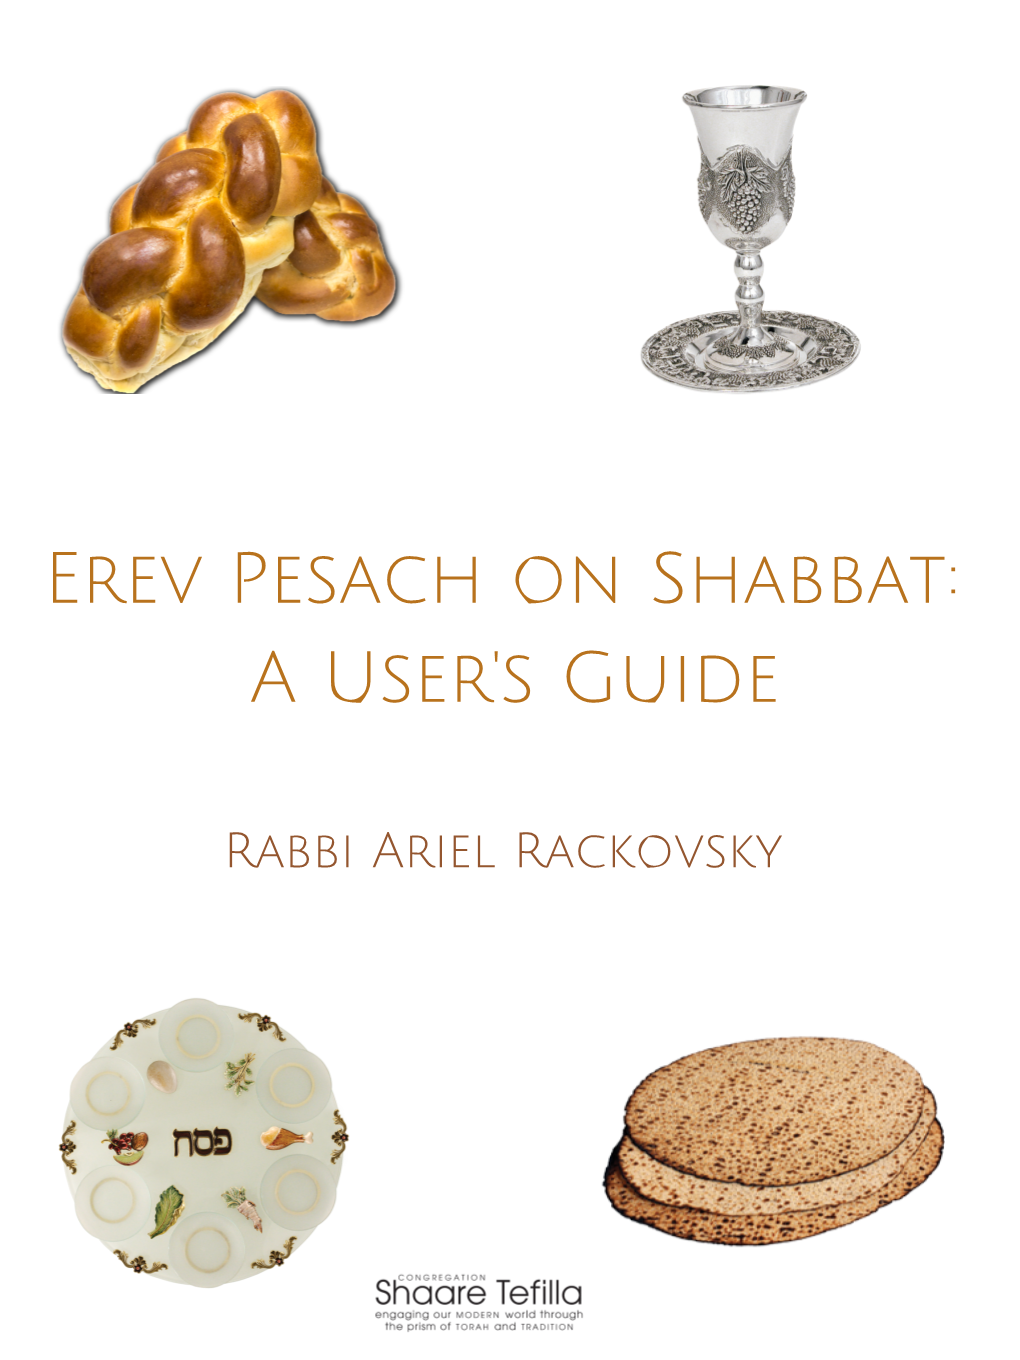 Erev Pesach on Shabbat: a User's Guide